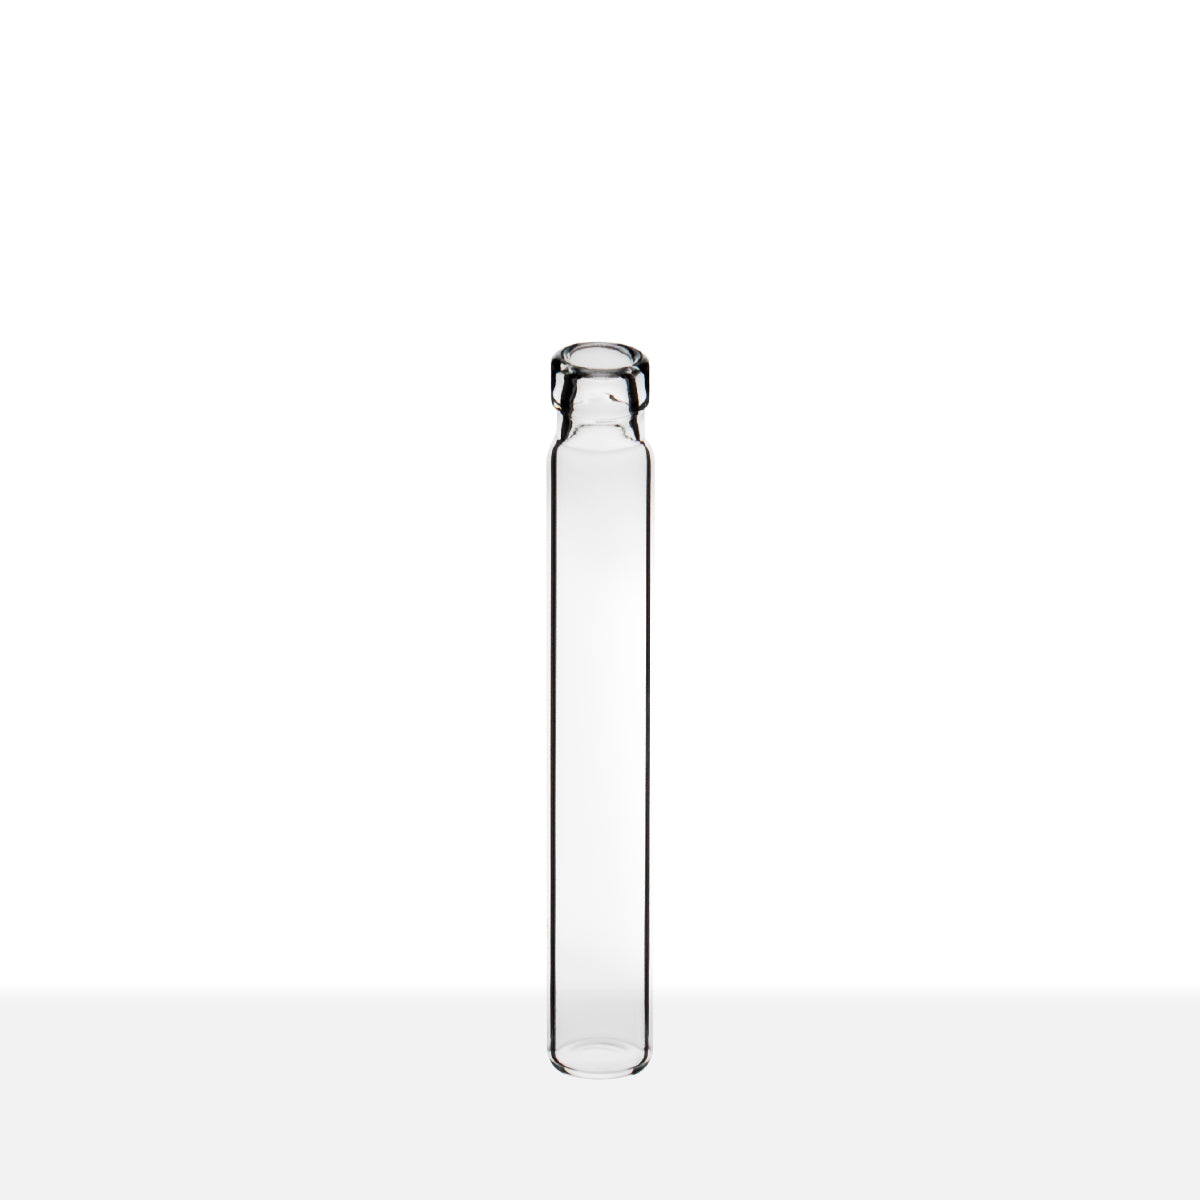 PATENT LIP GLASS VIALS - CLEAR Item #:VCPC750